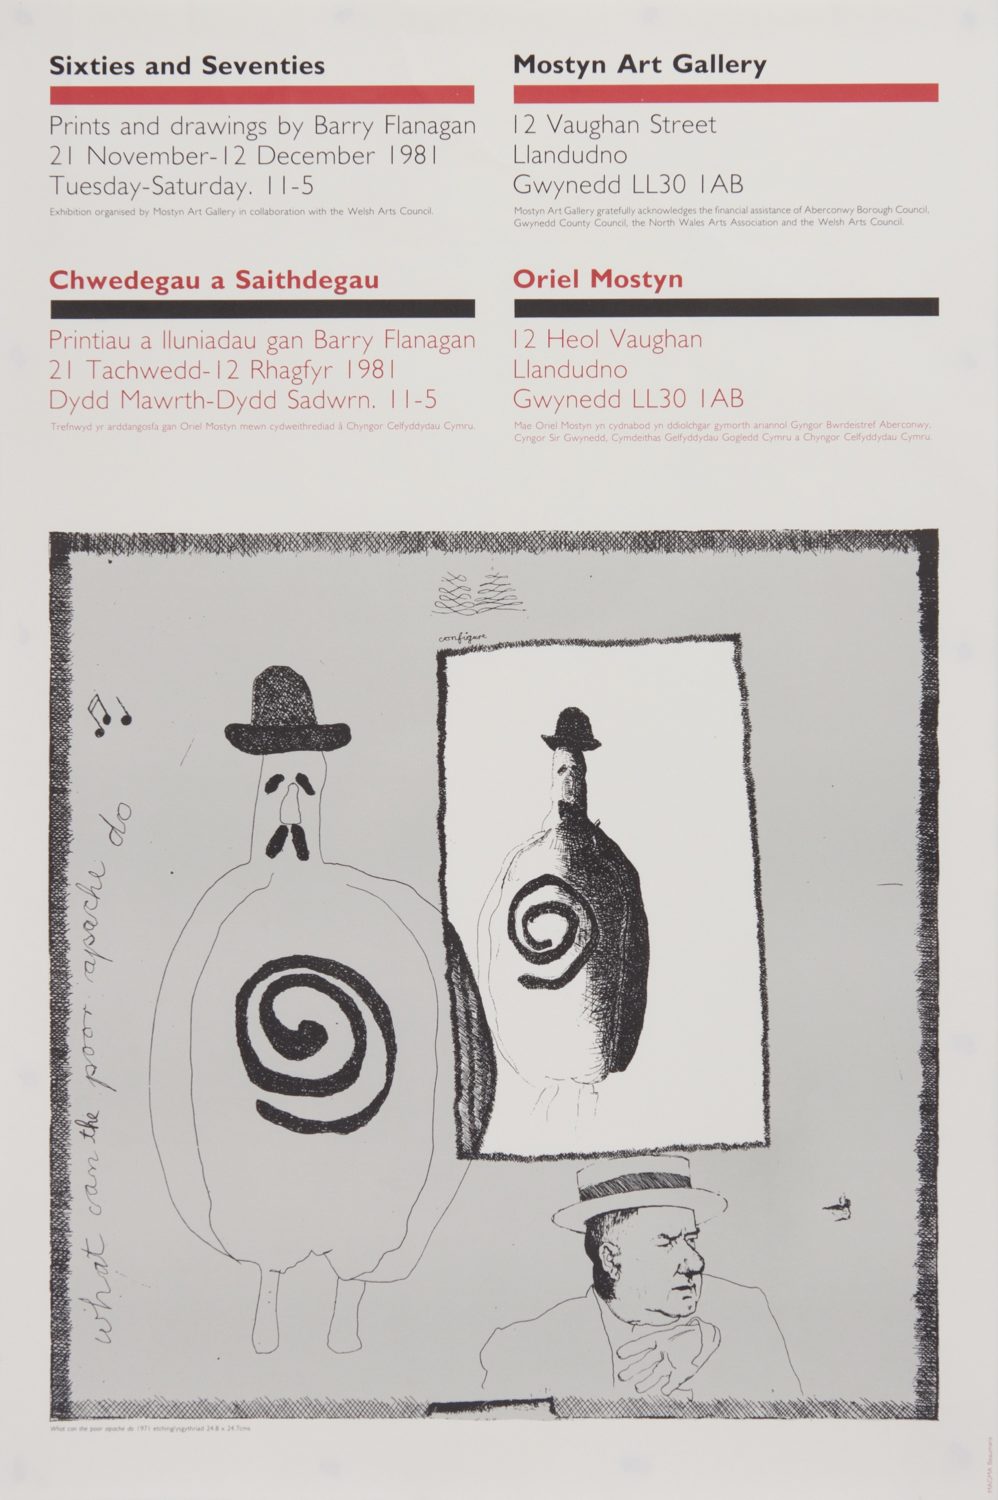 ‘Sixties and Seventies: Prints and Drawings by Barry Flanagan’, Mostyn Art Gallery, Llandudno, UK (1981)